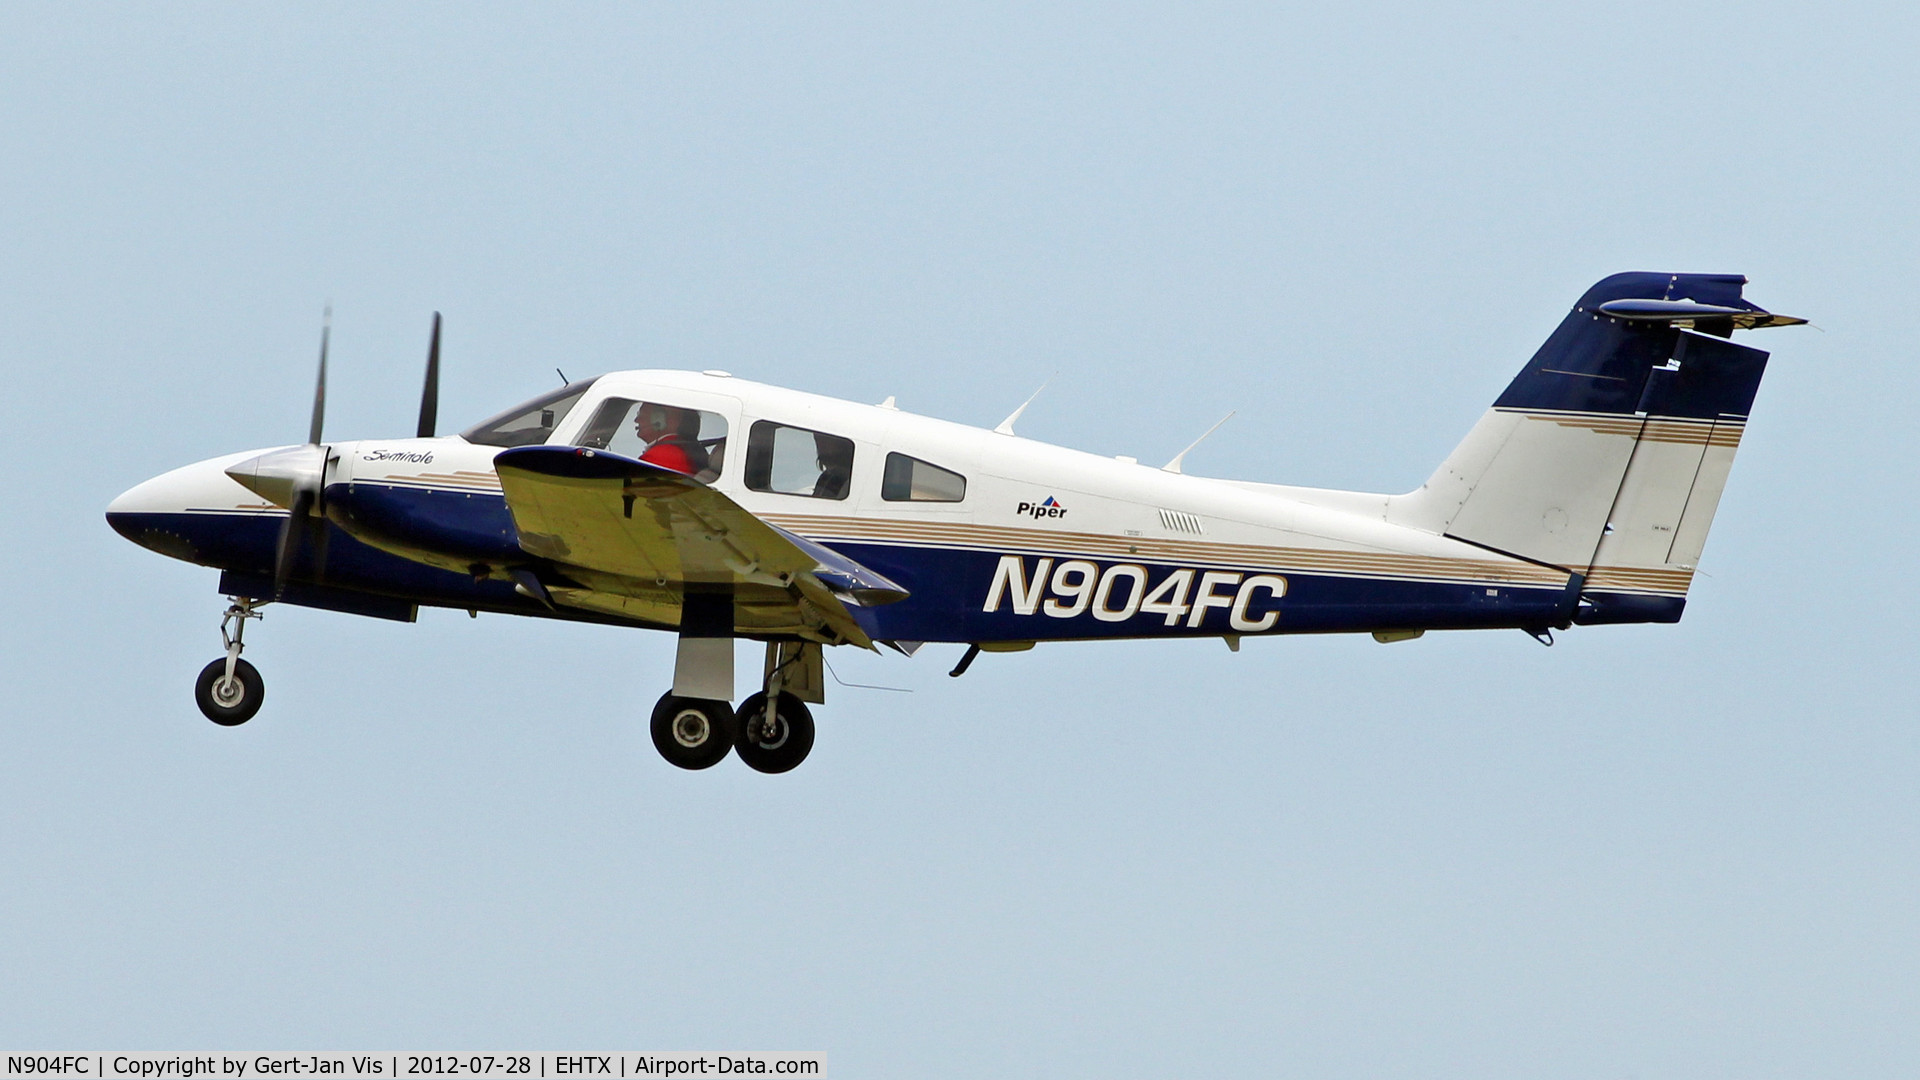 N904FC, 1981 Piper PA-44-180T Turbo Seminole C/N 44-8107045, Taking off at airshow Texel 2013